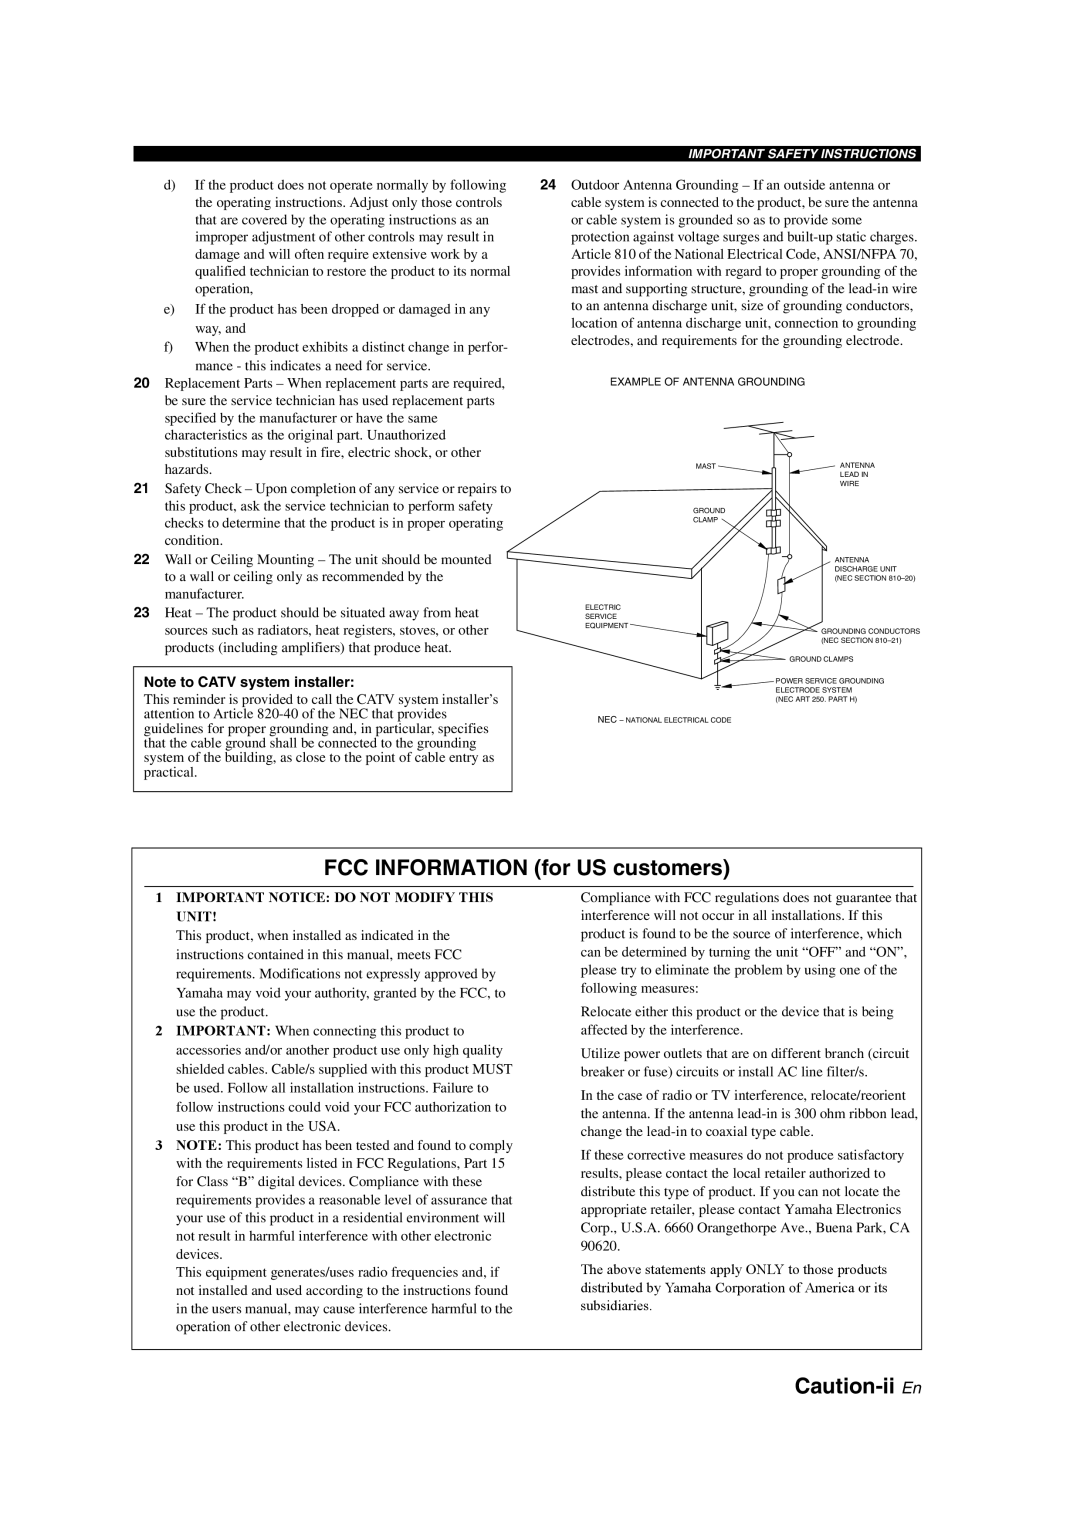 Yamaha RX-V563 owner manual FCC INFORMATION for US customers, Caution-ii En, Note to CATV system installer 